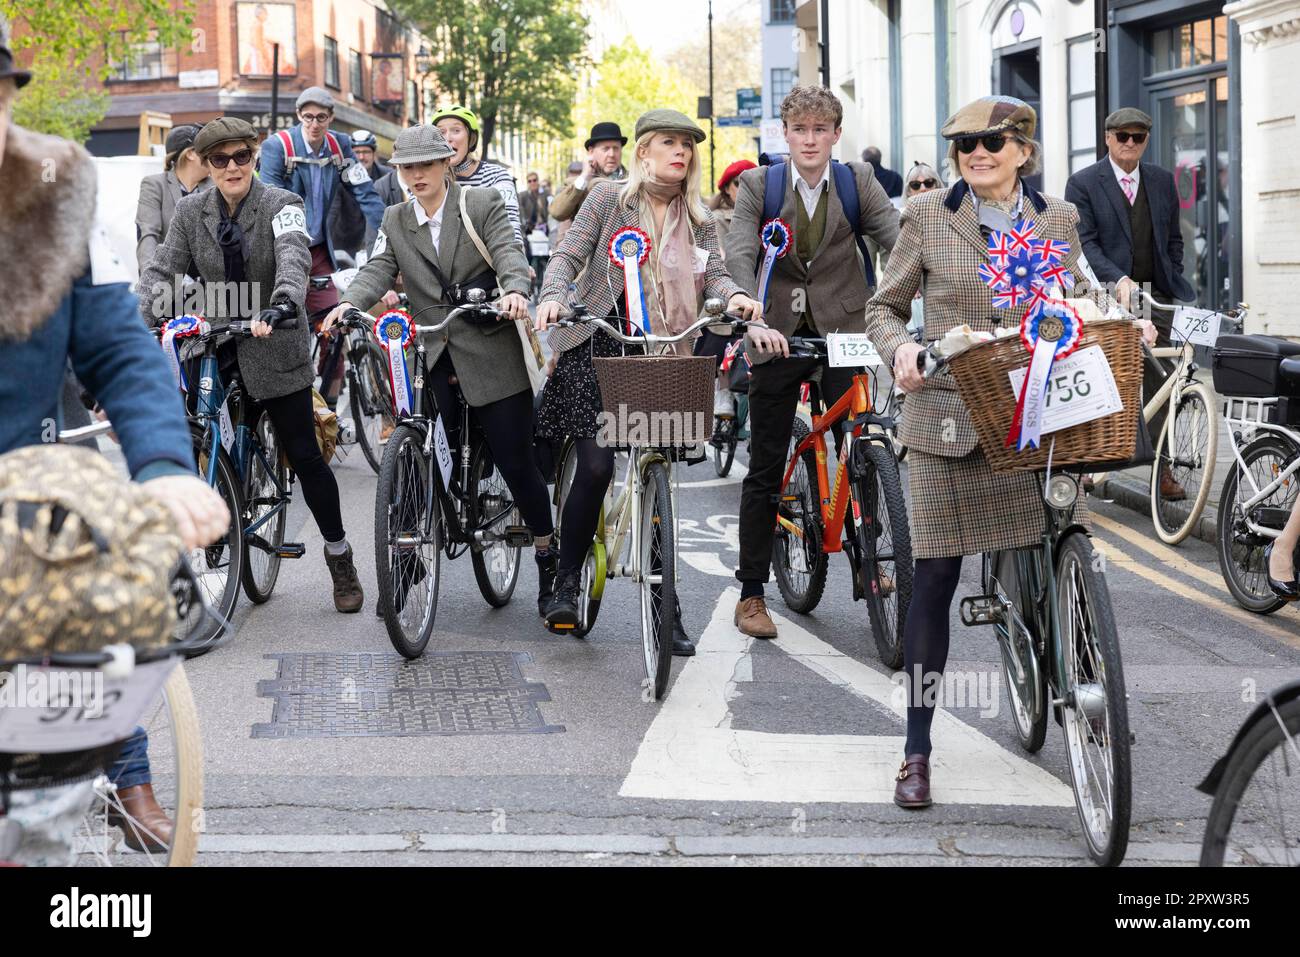 FOTO: JEFF GILBERT Samstag, 29. April 2023. Tweed Run, London, Großbritannien, nimmt am Tweed Cycle Run Teil, der in klassischer Tweed-Kleidung gekleidet ist Stockfoto